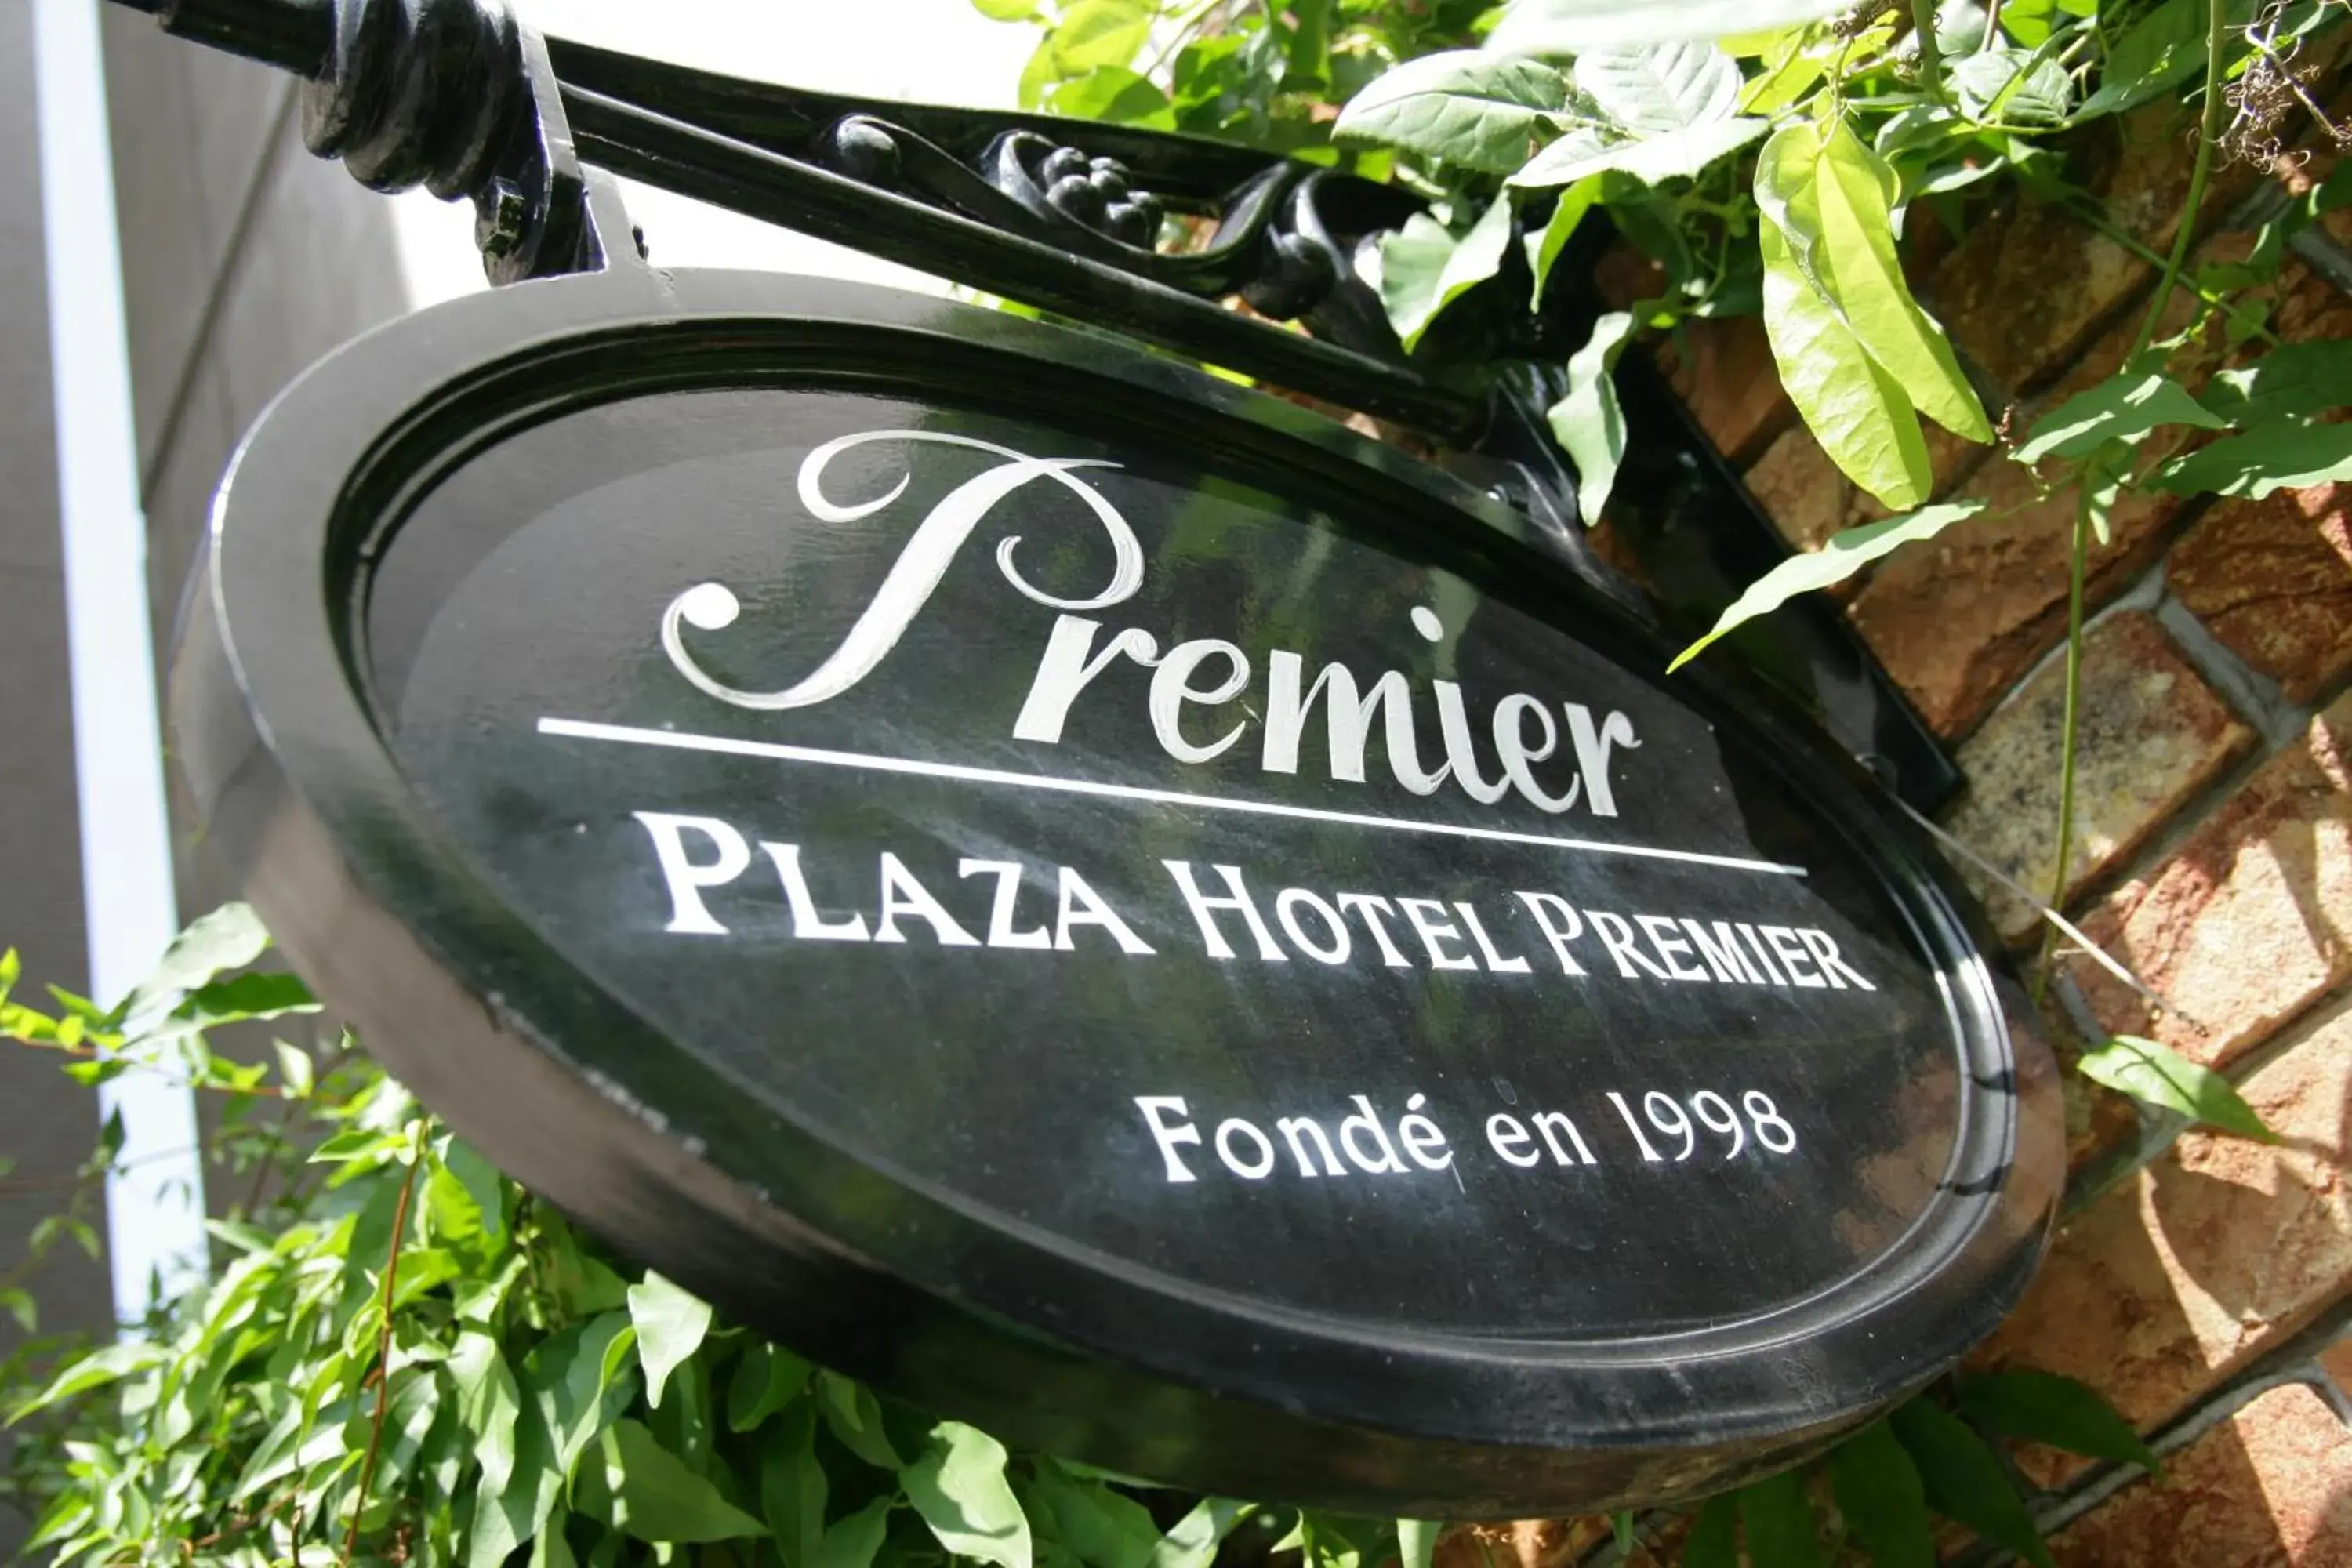 Property logo or sign in Plaza Hotel Premier